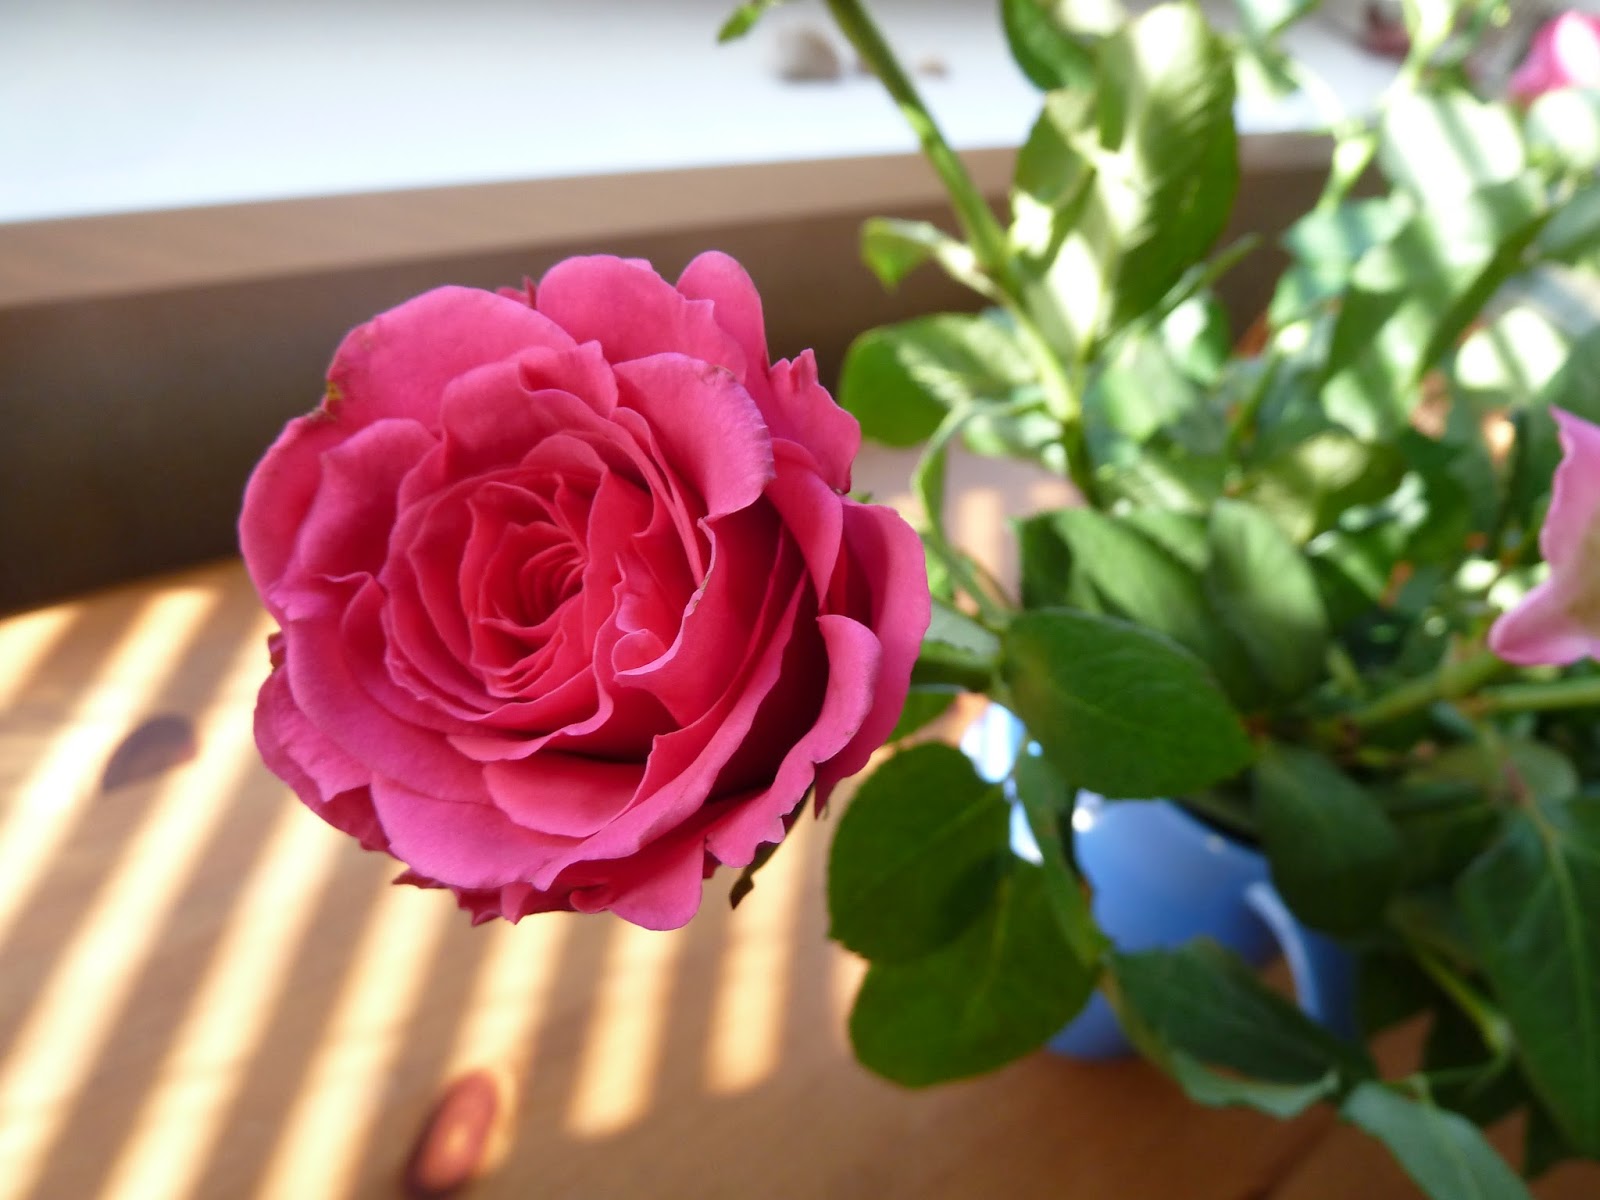 Frilly pink rose against stripes of light